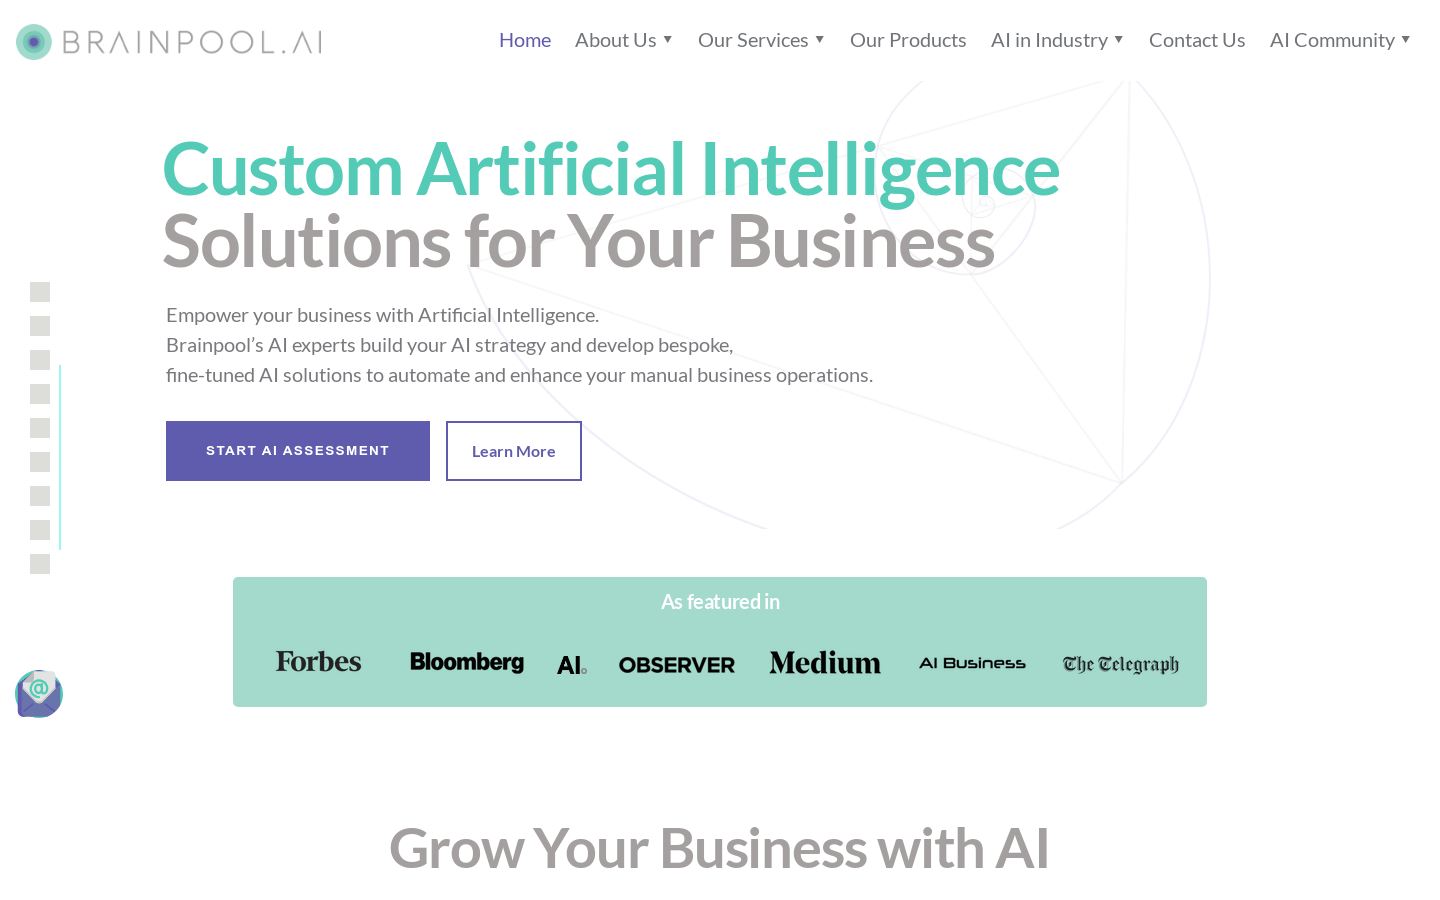 Brainpool AI